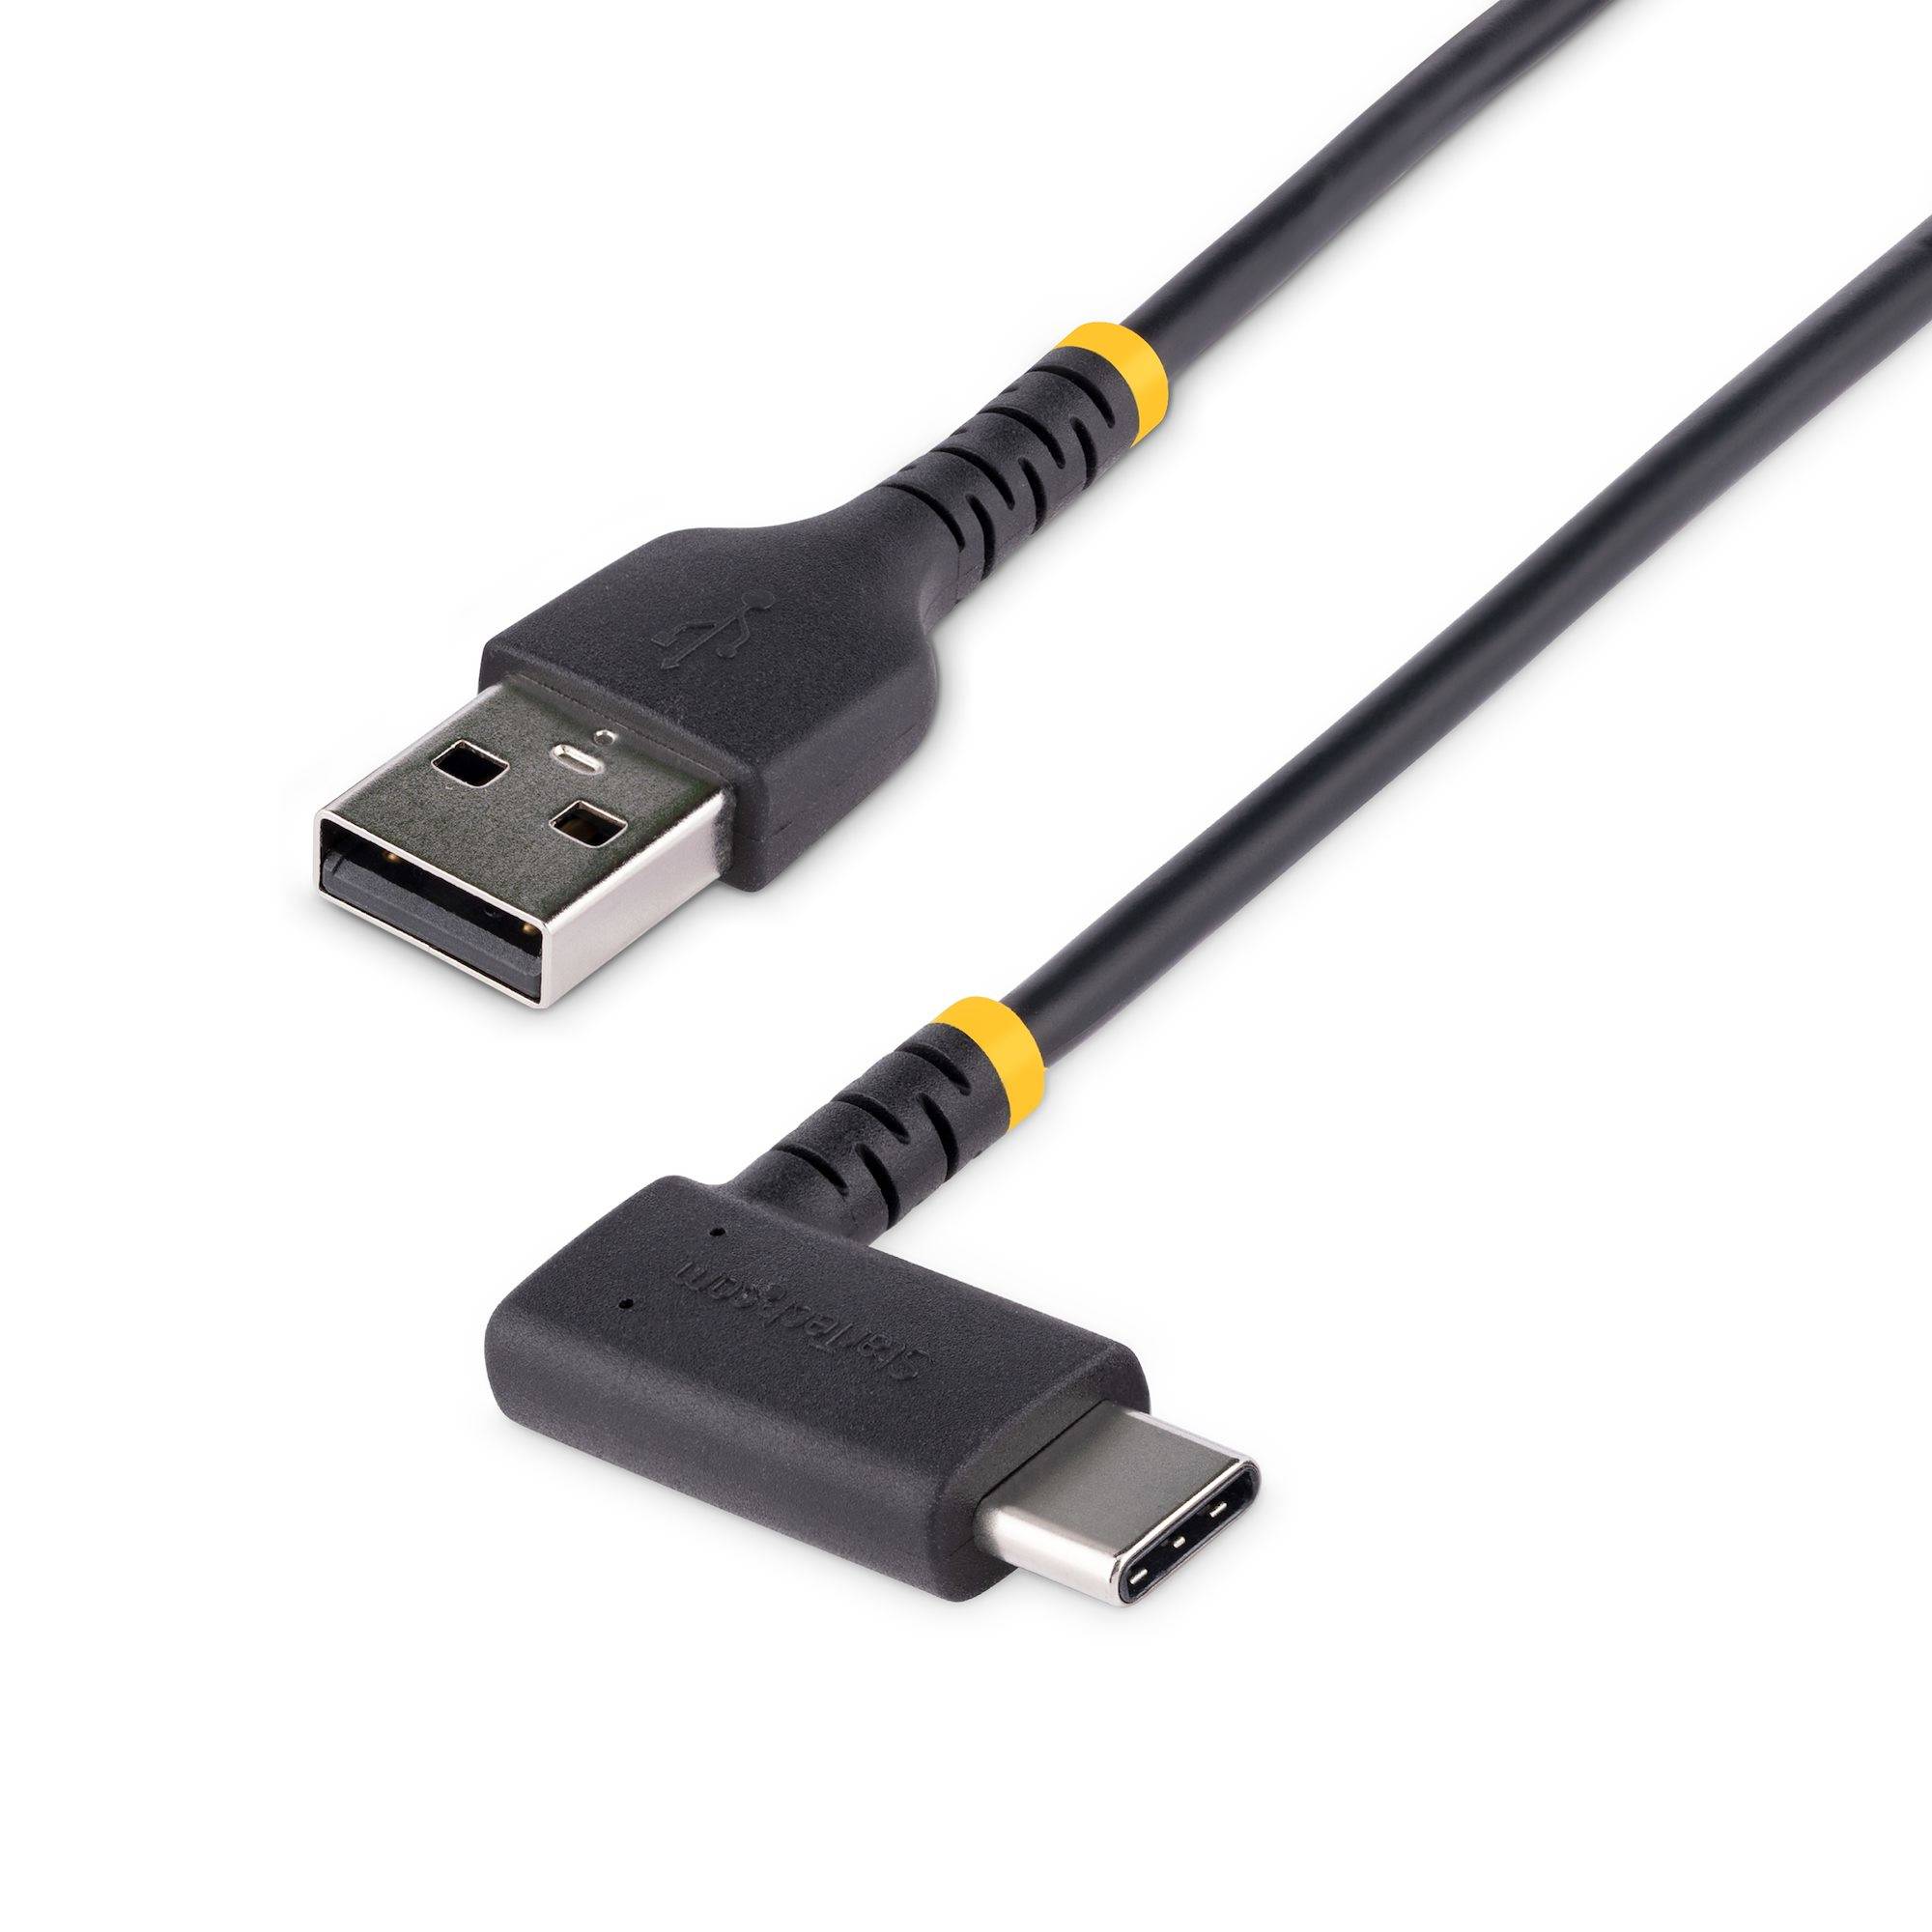 Rca Informatique - image du produit : USB-A TO USB-C CHARGING CABLE 2M RIGHT ANGLE USB-C USBC CABLE